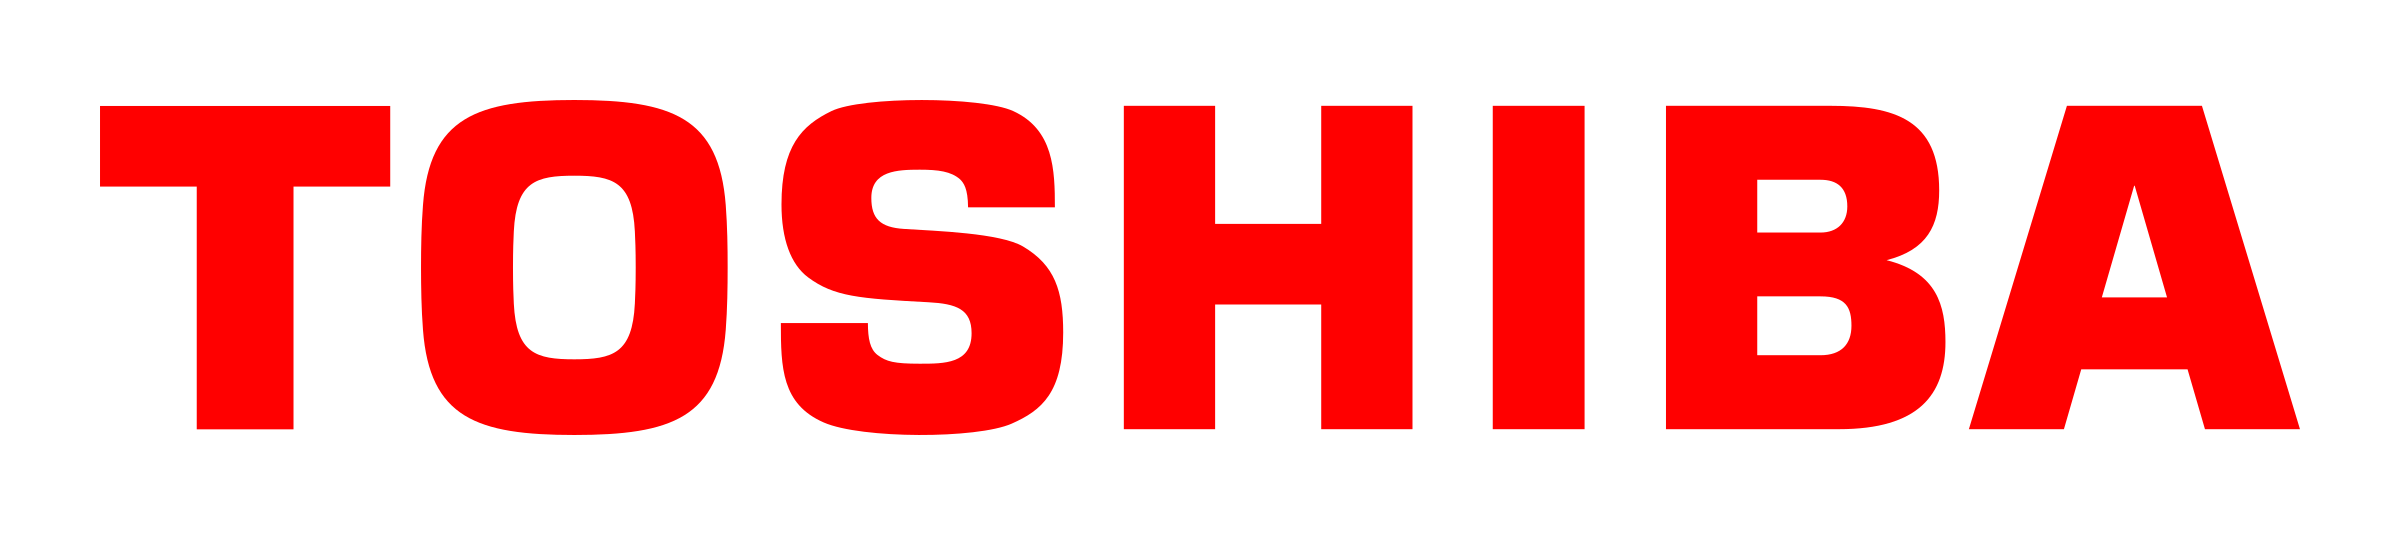 toshiba-logo-png-transparent